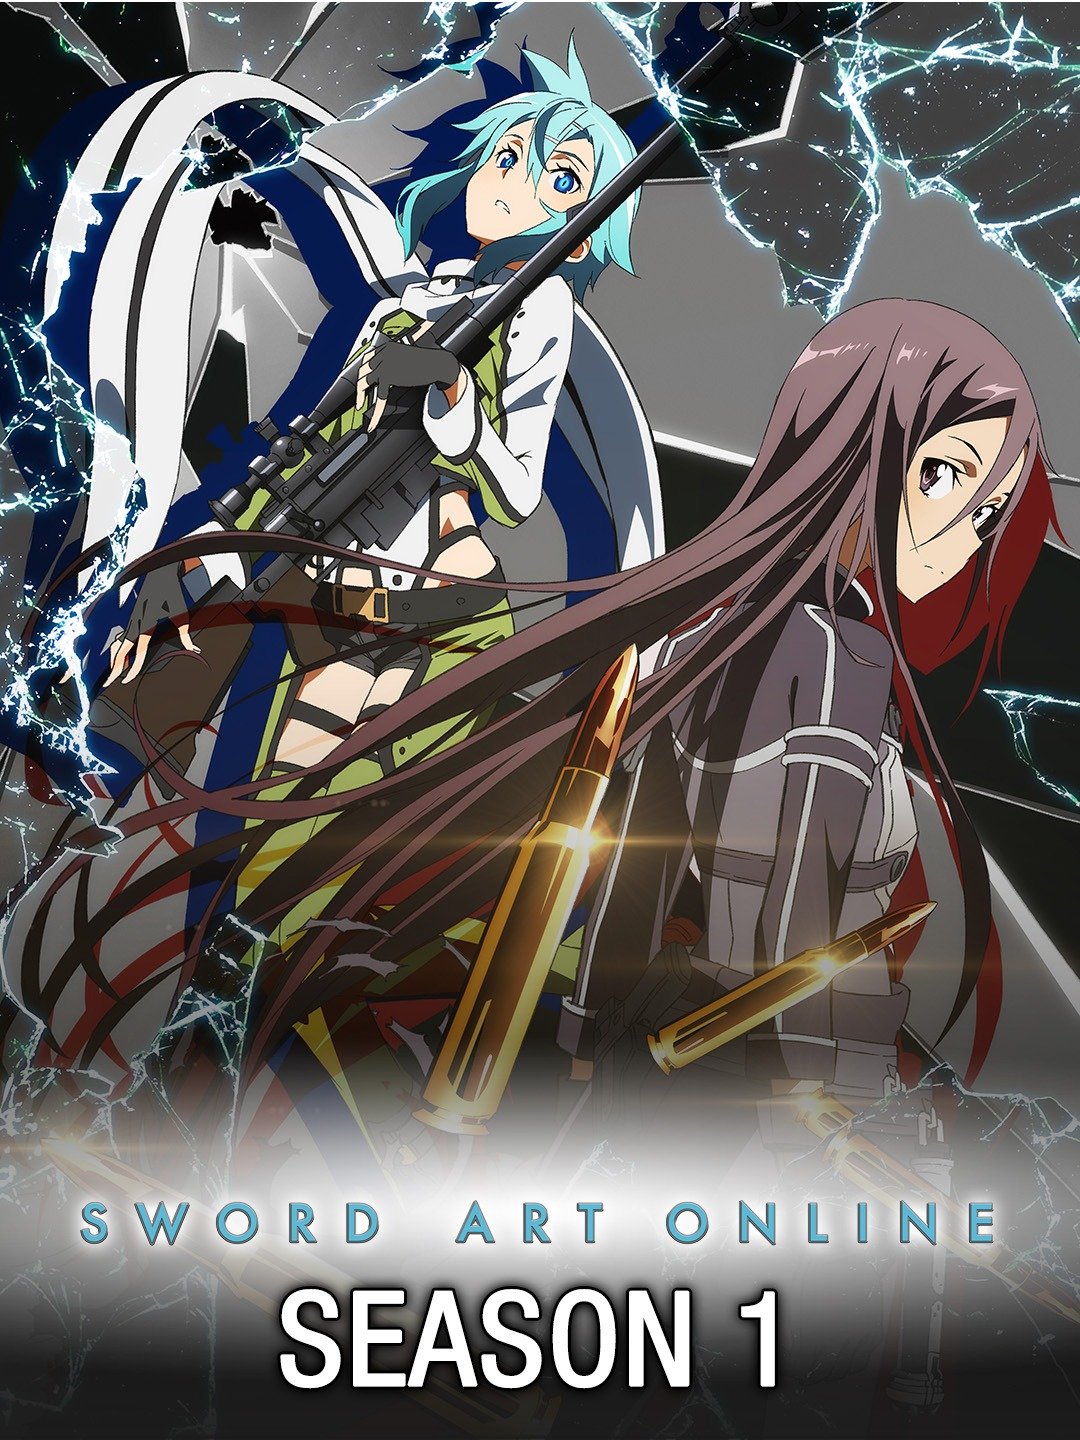 Online netflix release date art sword season 3 Sword Art